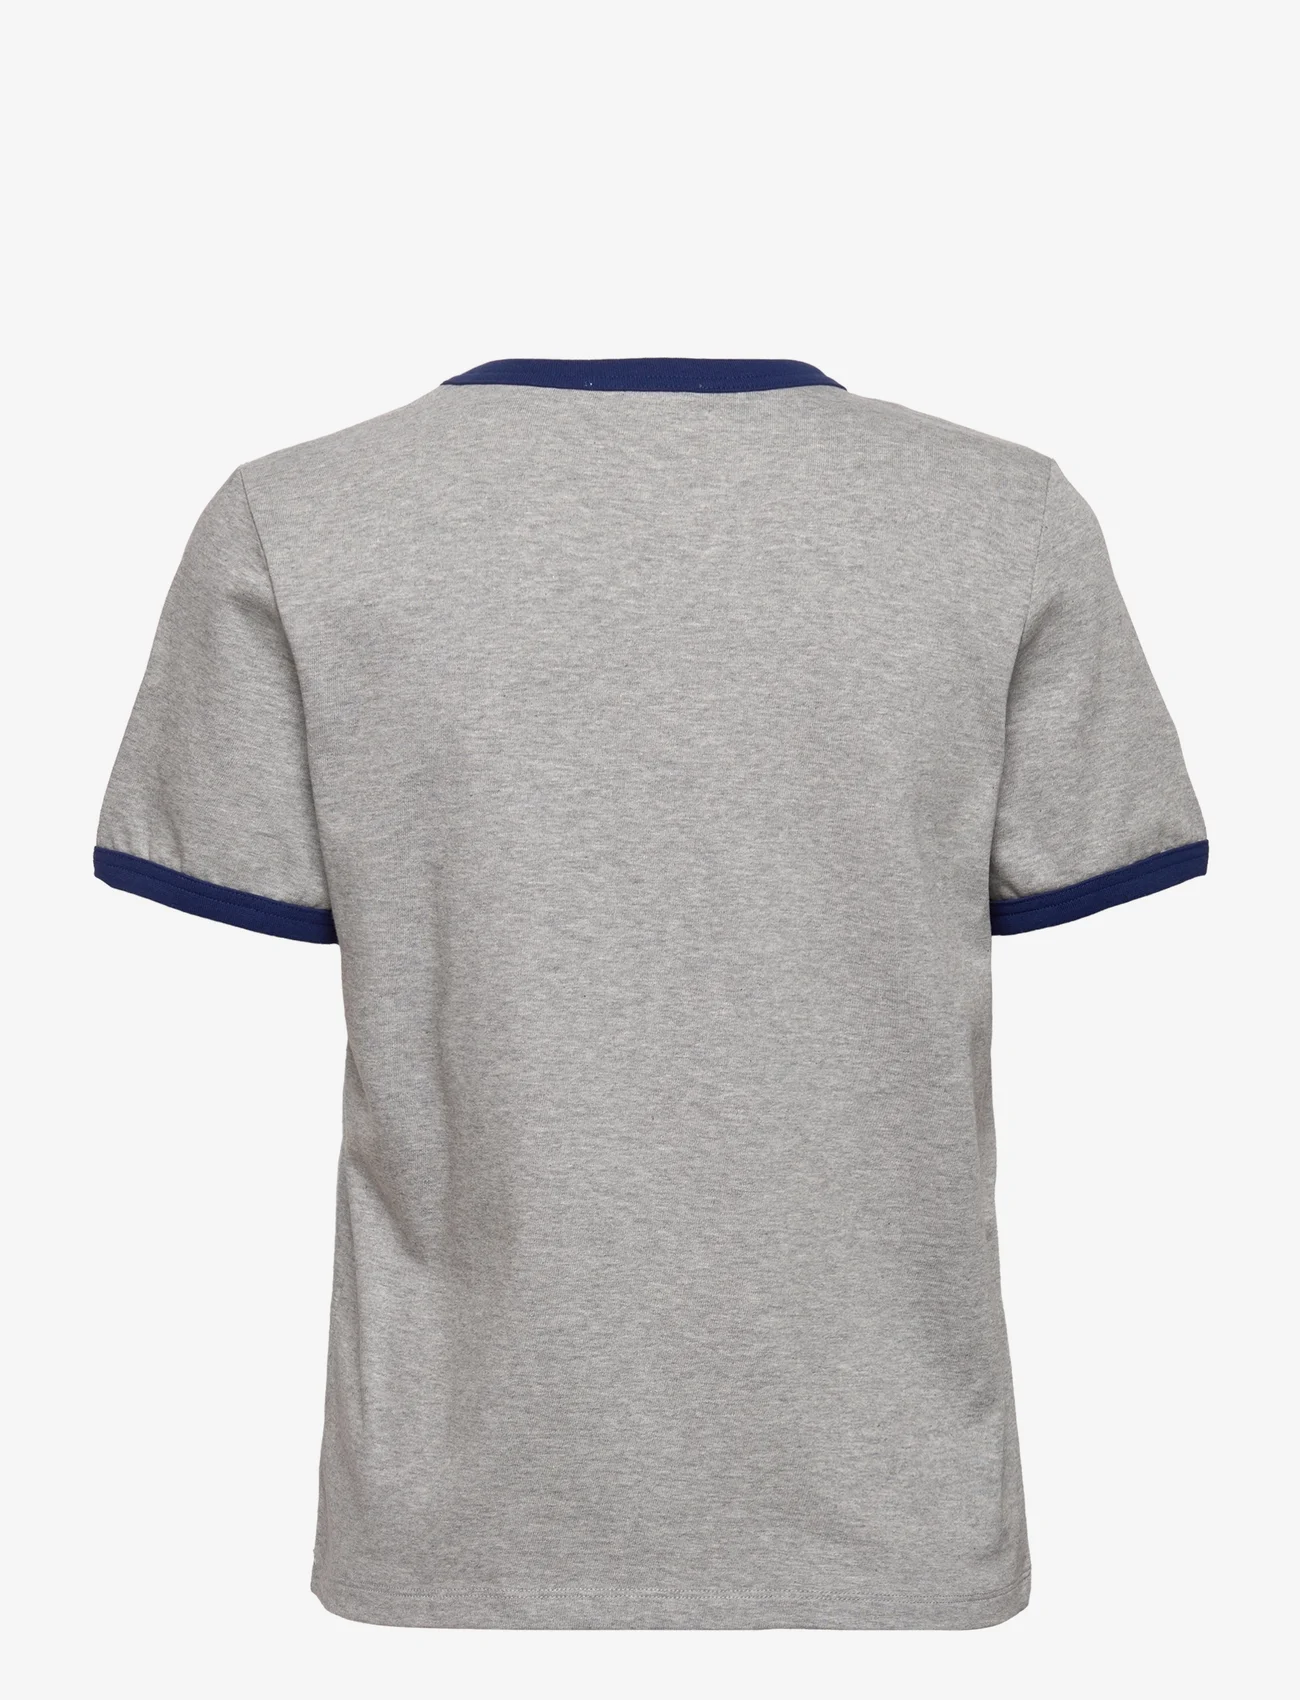 RODEBJER - Rodebjer Faye - t-shirt & tops - grey melange - 1